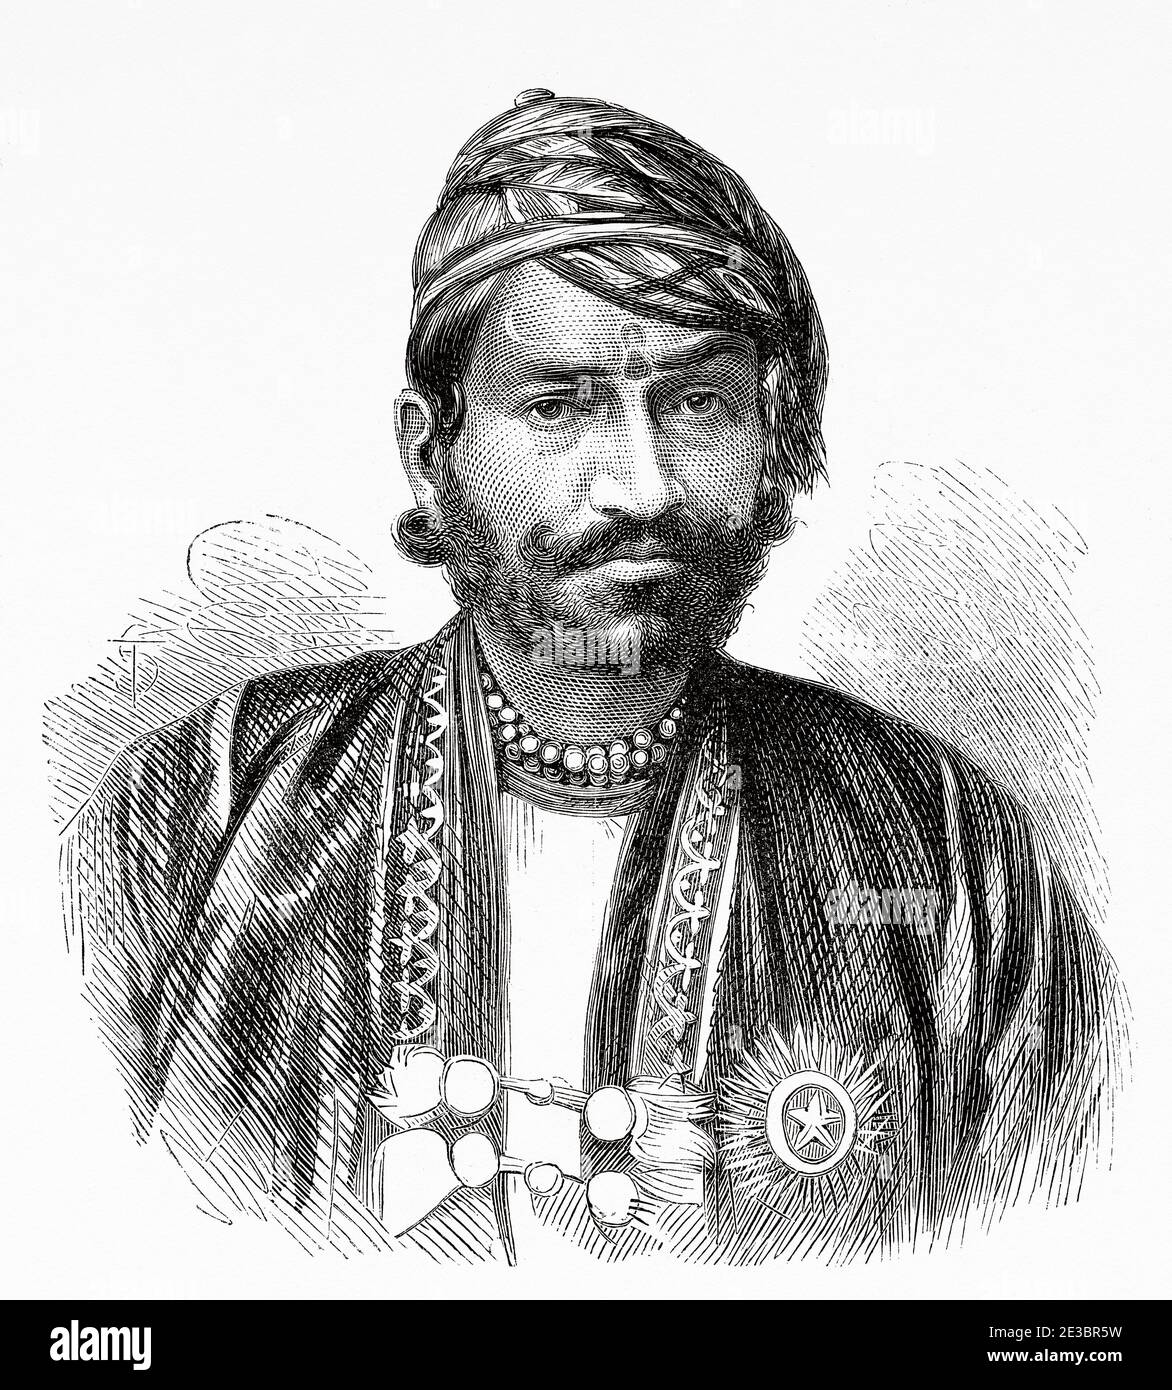 Portrait of Maharajah Sawai Ram Singh II, Maharajah of Jaipur, India. Old engraving illustration Prince of Wales Albert Edward tour of India. El Mundo en la Mano 1878 Stock Photo